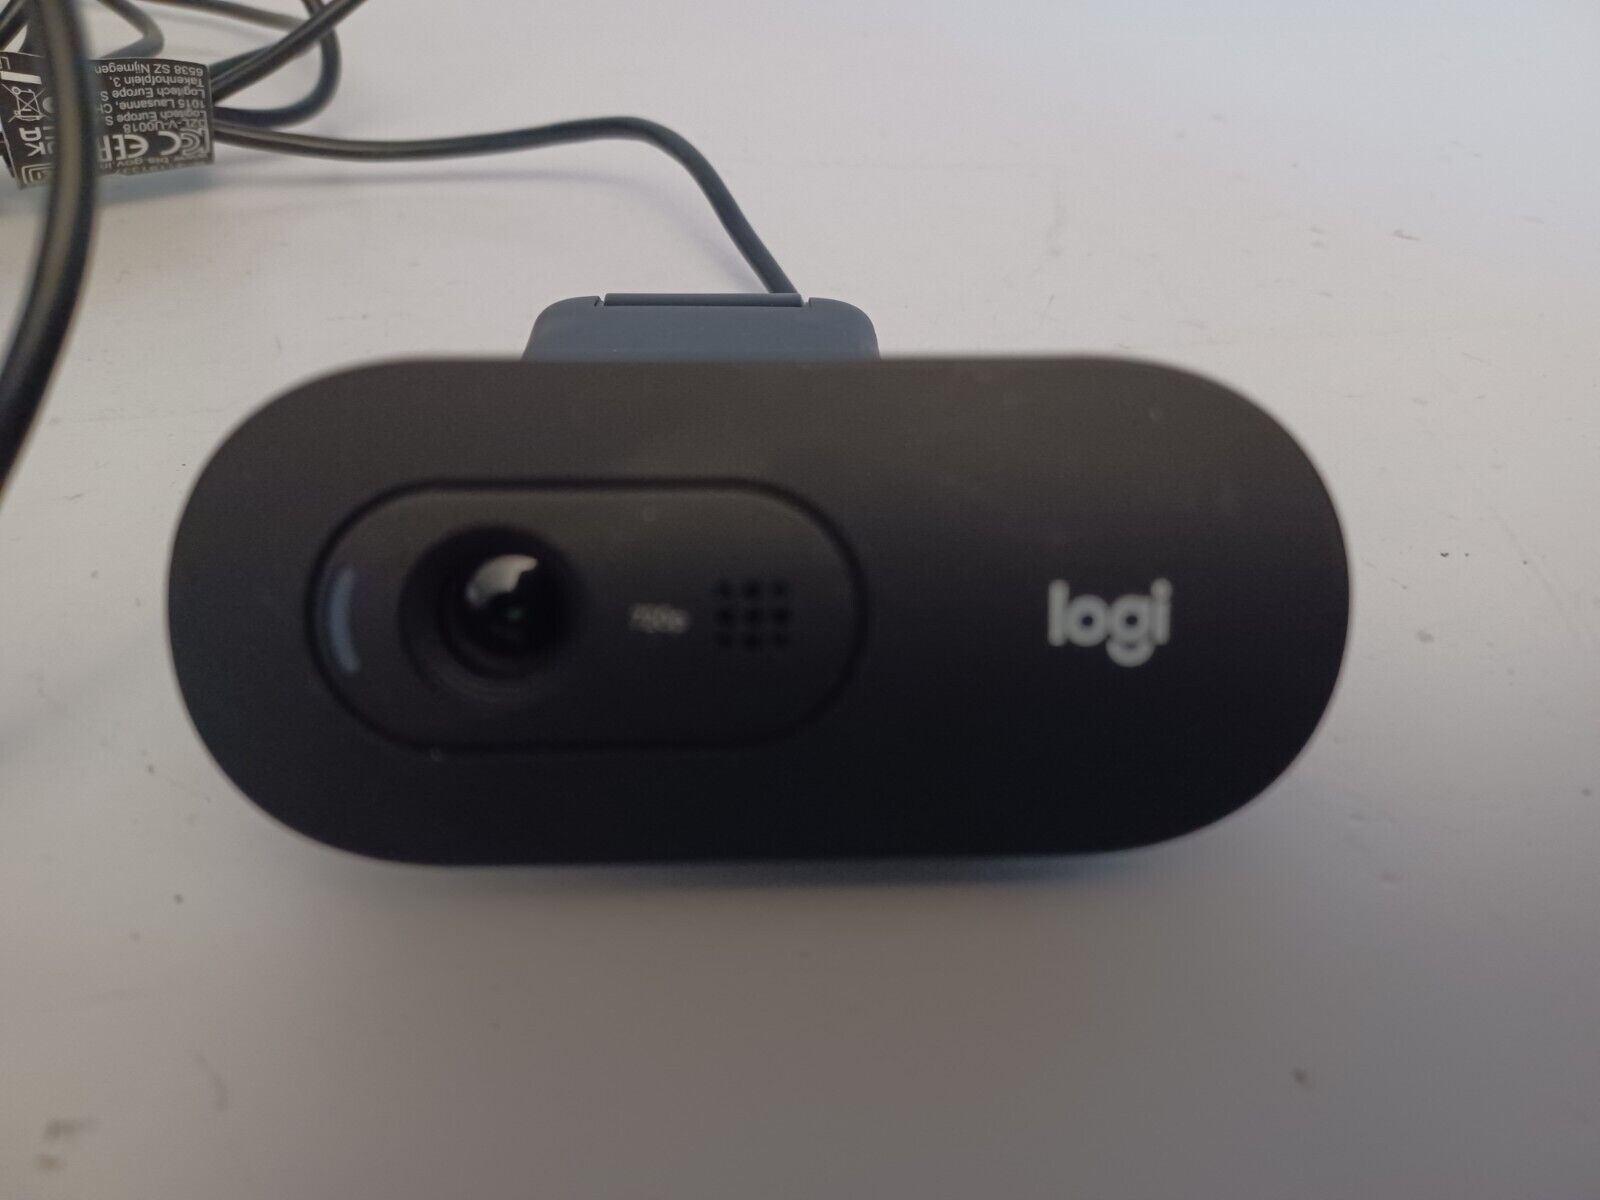 Logitech C505 Webcam - 720p HD External USB Camera for Desktop or Laptop with...